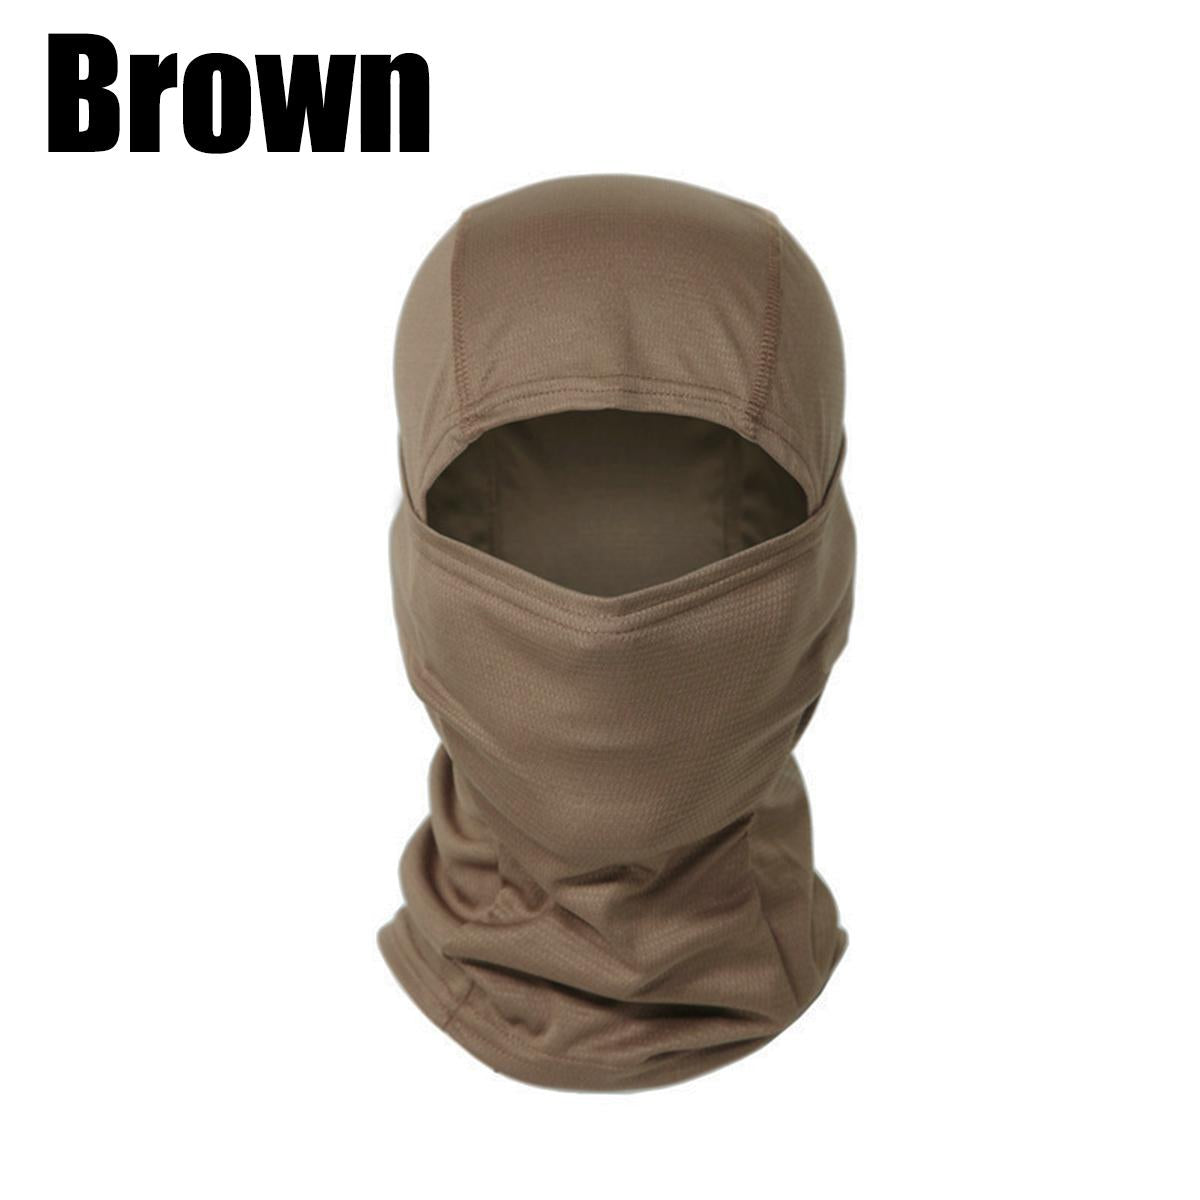 Balaclava Face Mask Ski Sun Hood UV Protection